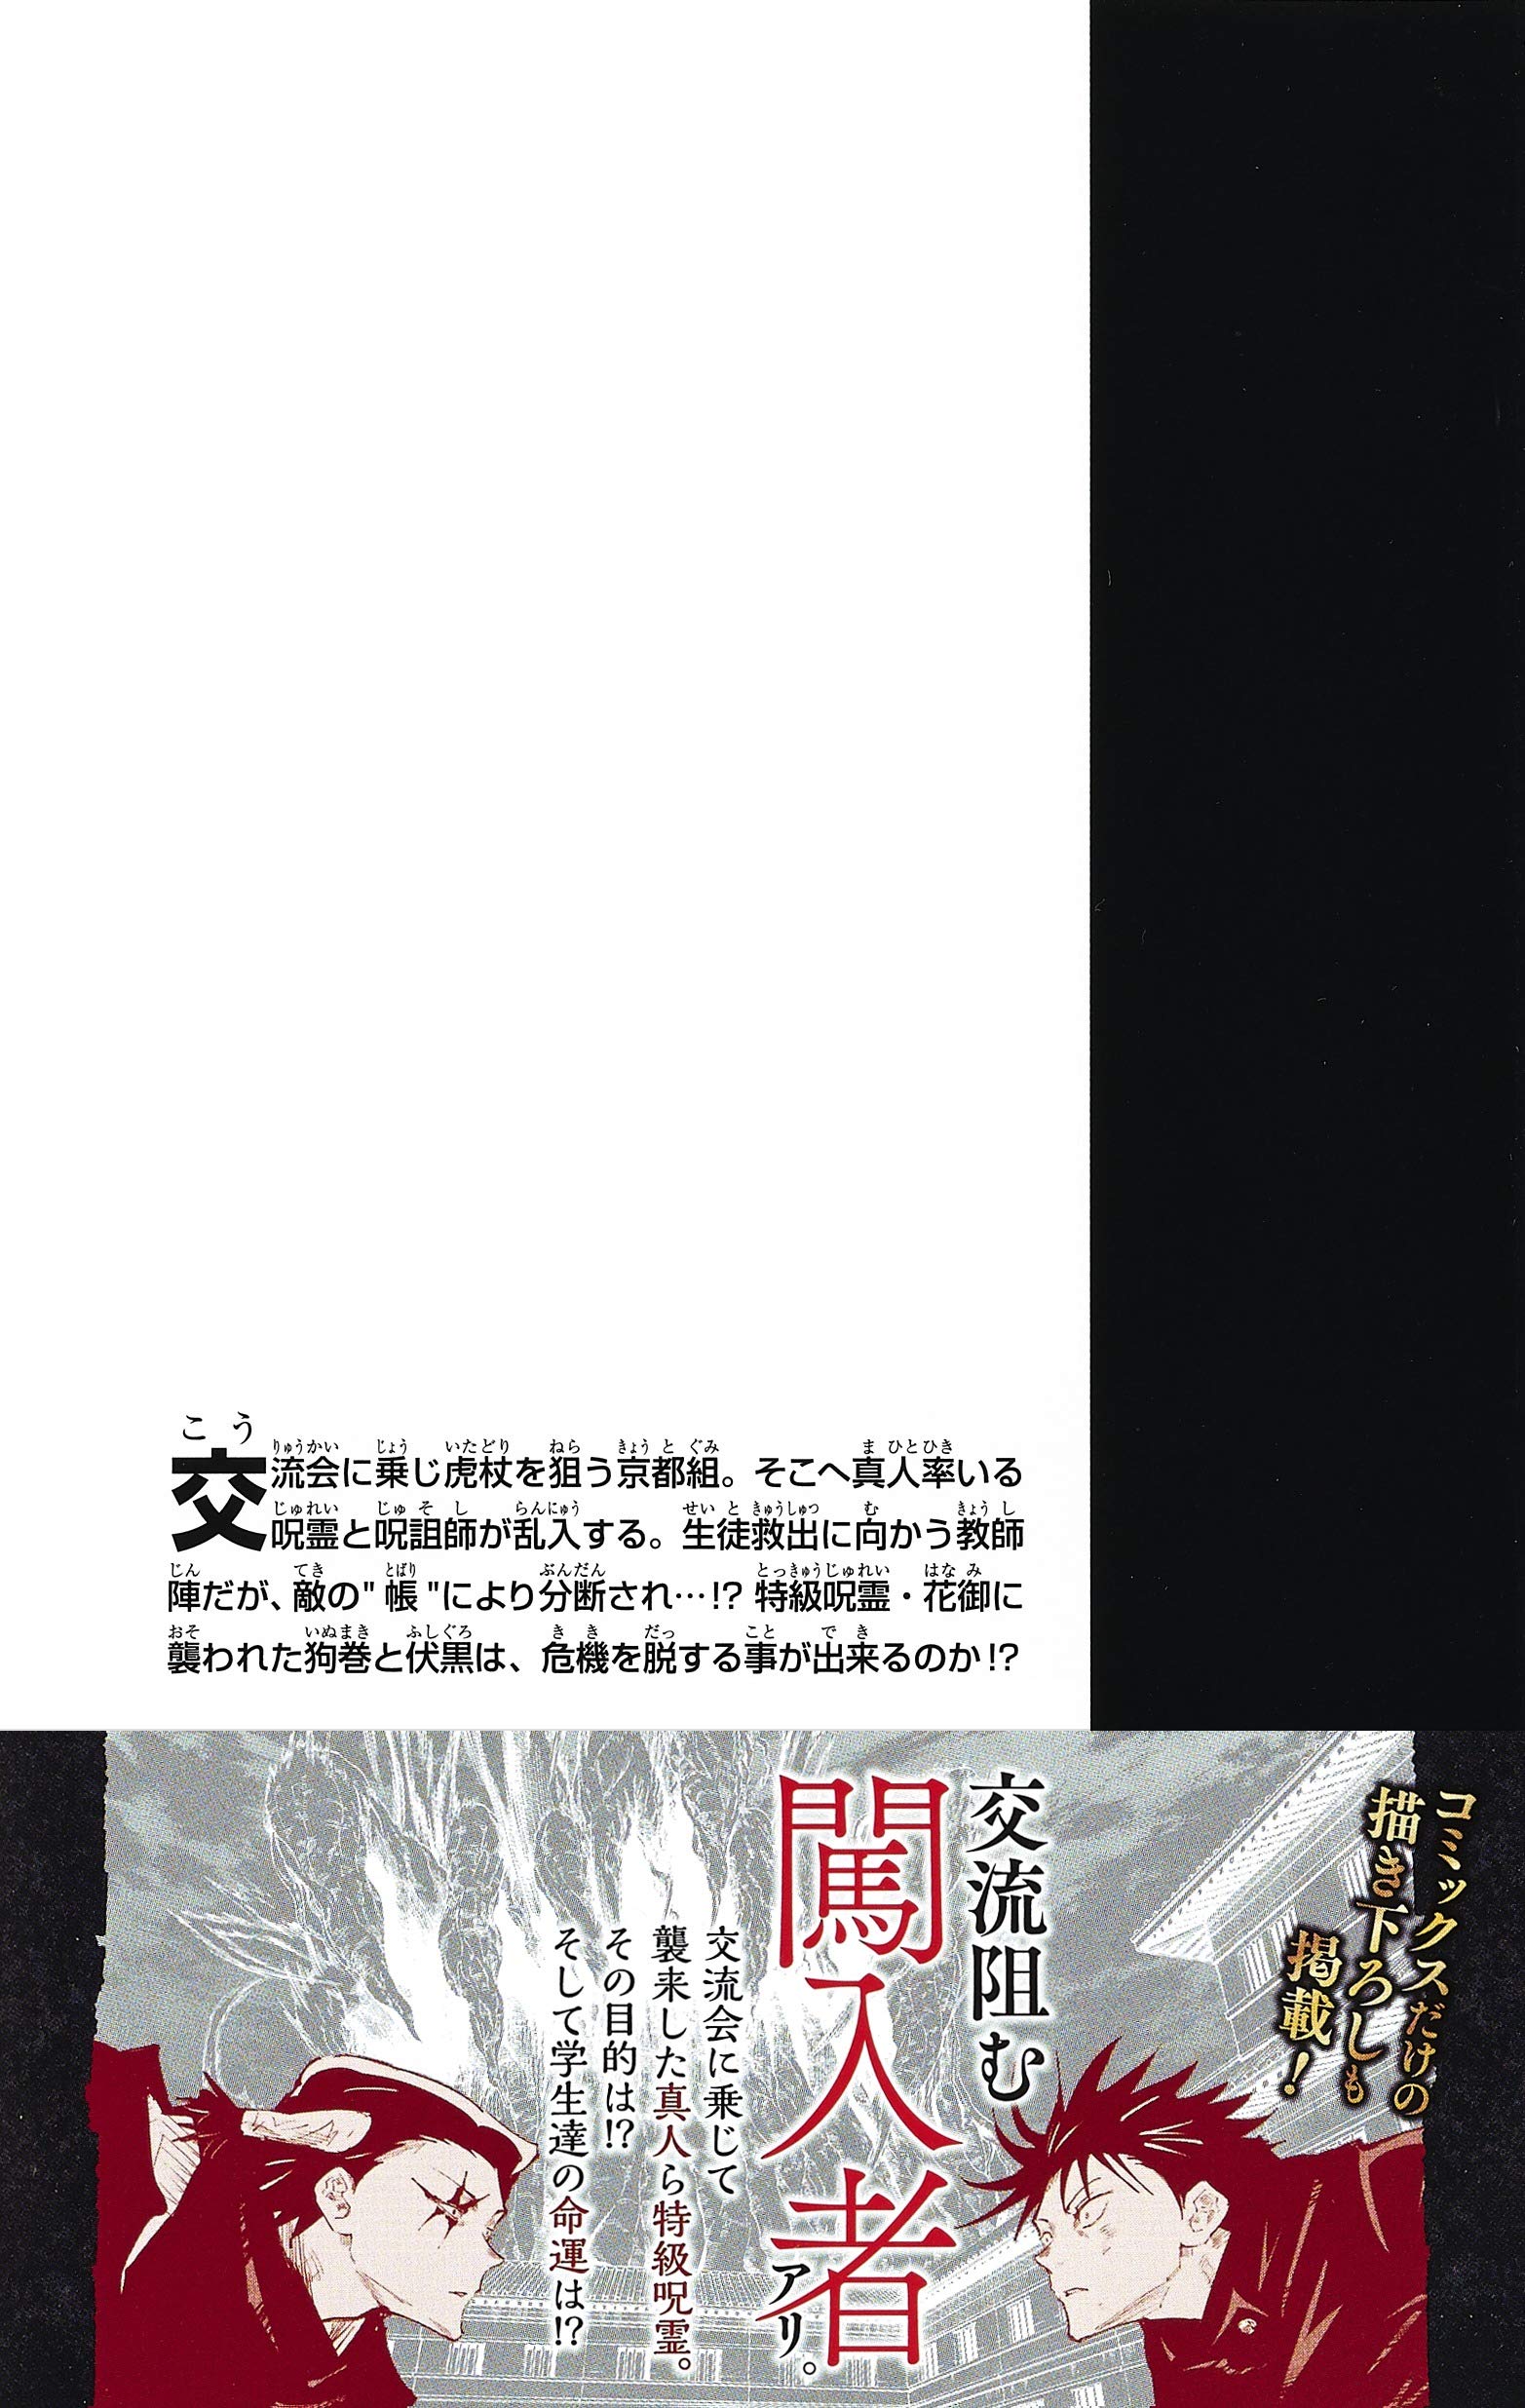 Manga Jujutsu Kaisen vol.6 (呪術廻戦 6 (ジャンプコミックス))  / Akutami Gege & 芥見 下々